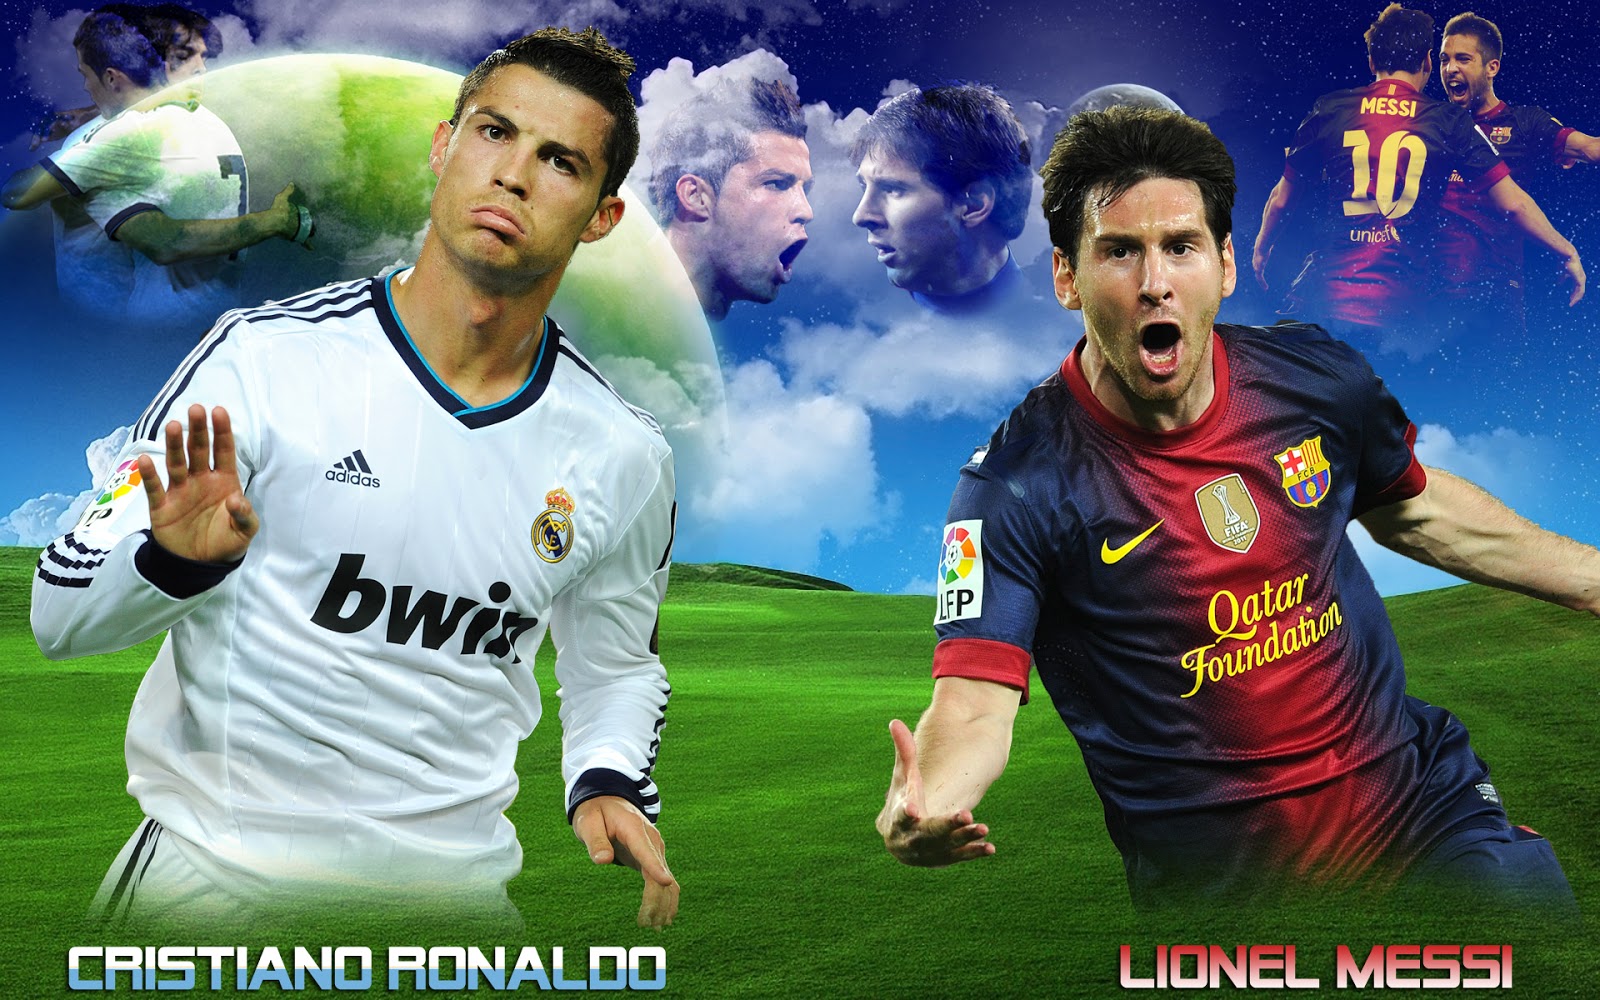 http://3.bp.blogspot.com/-p1YOSFRYpp8/UR57lMKj1XI/AAAAAAAAQe4/r-gmad55uvk/s1600/Lionel_Messi_Cristiano_Ronaldo_2013_Wallpaper_HD_1.jpg